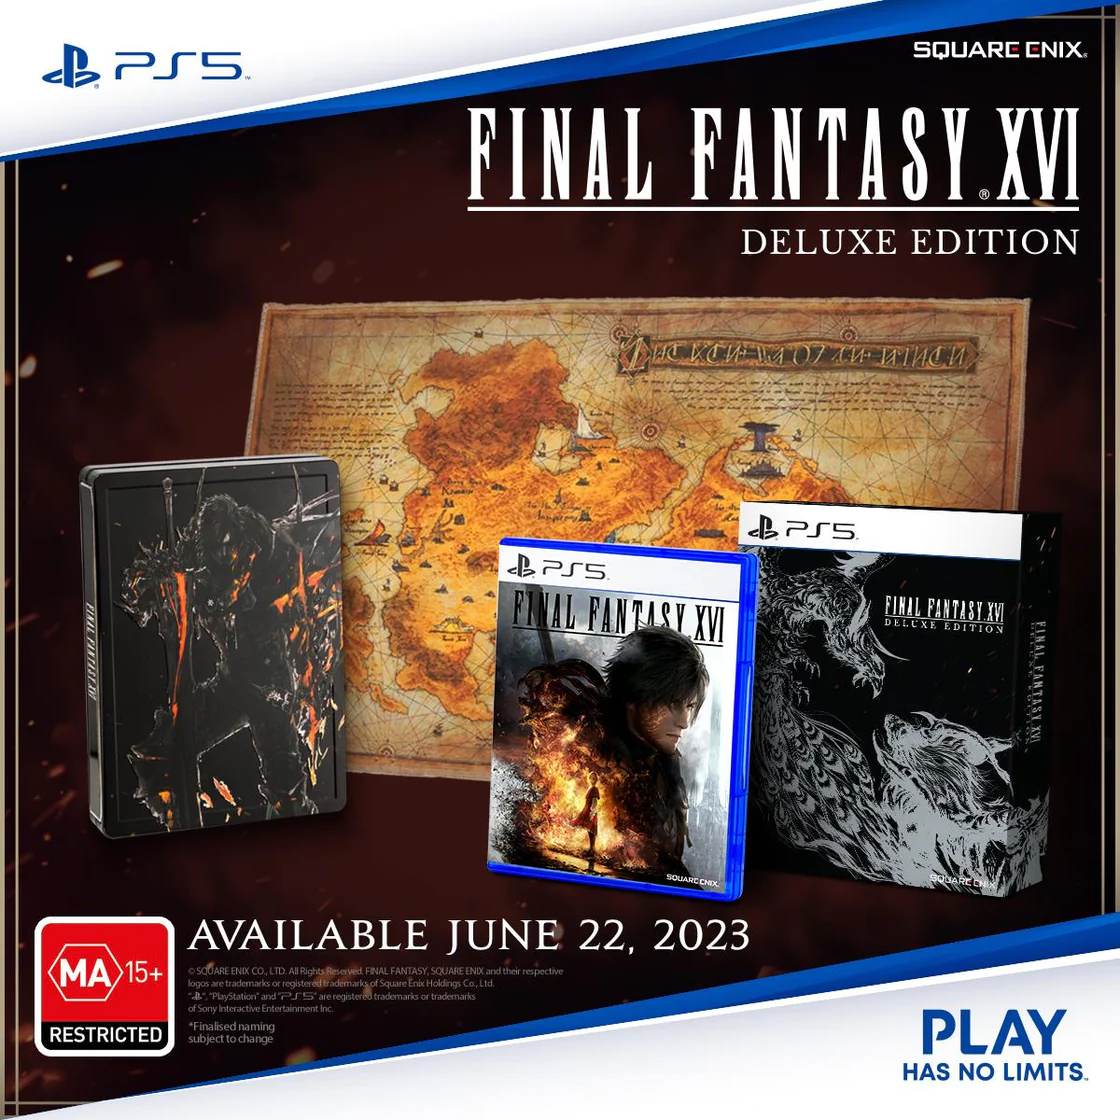 Final Fantasy XVI - Bargain Guide — Maxi-Geek